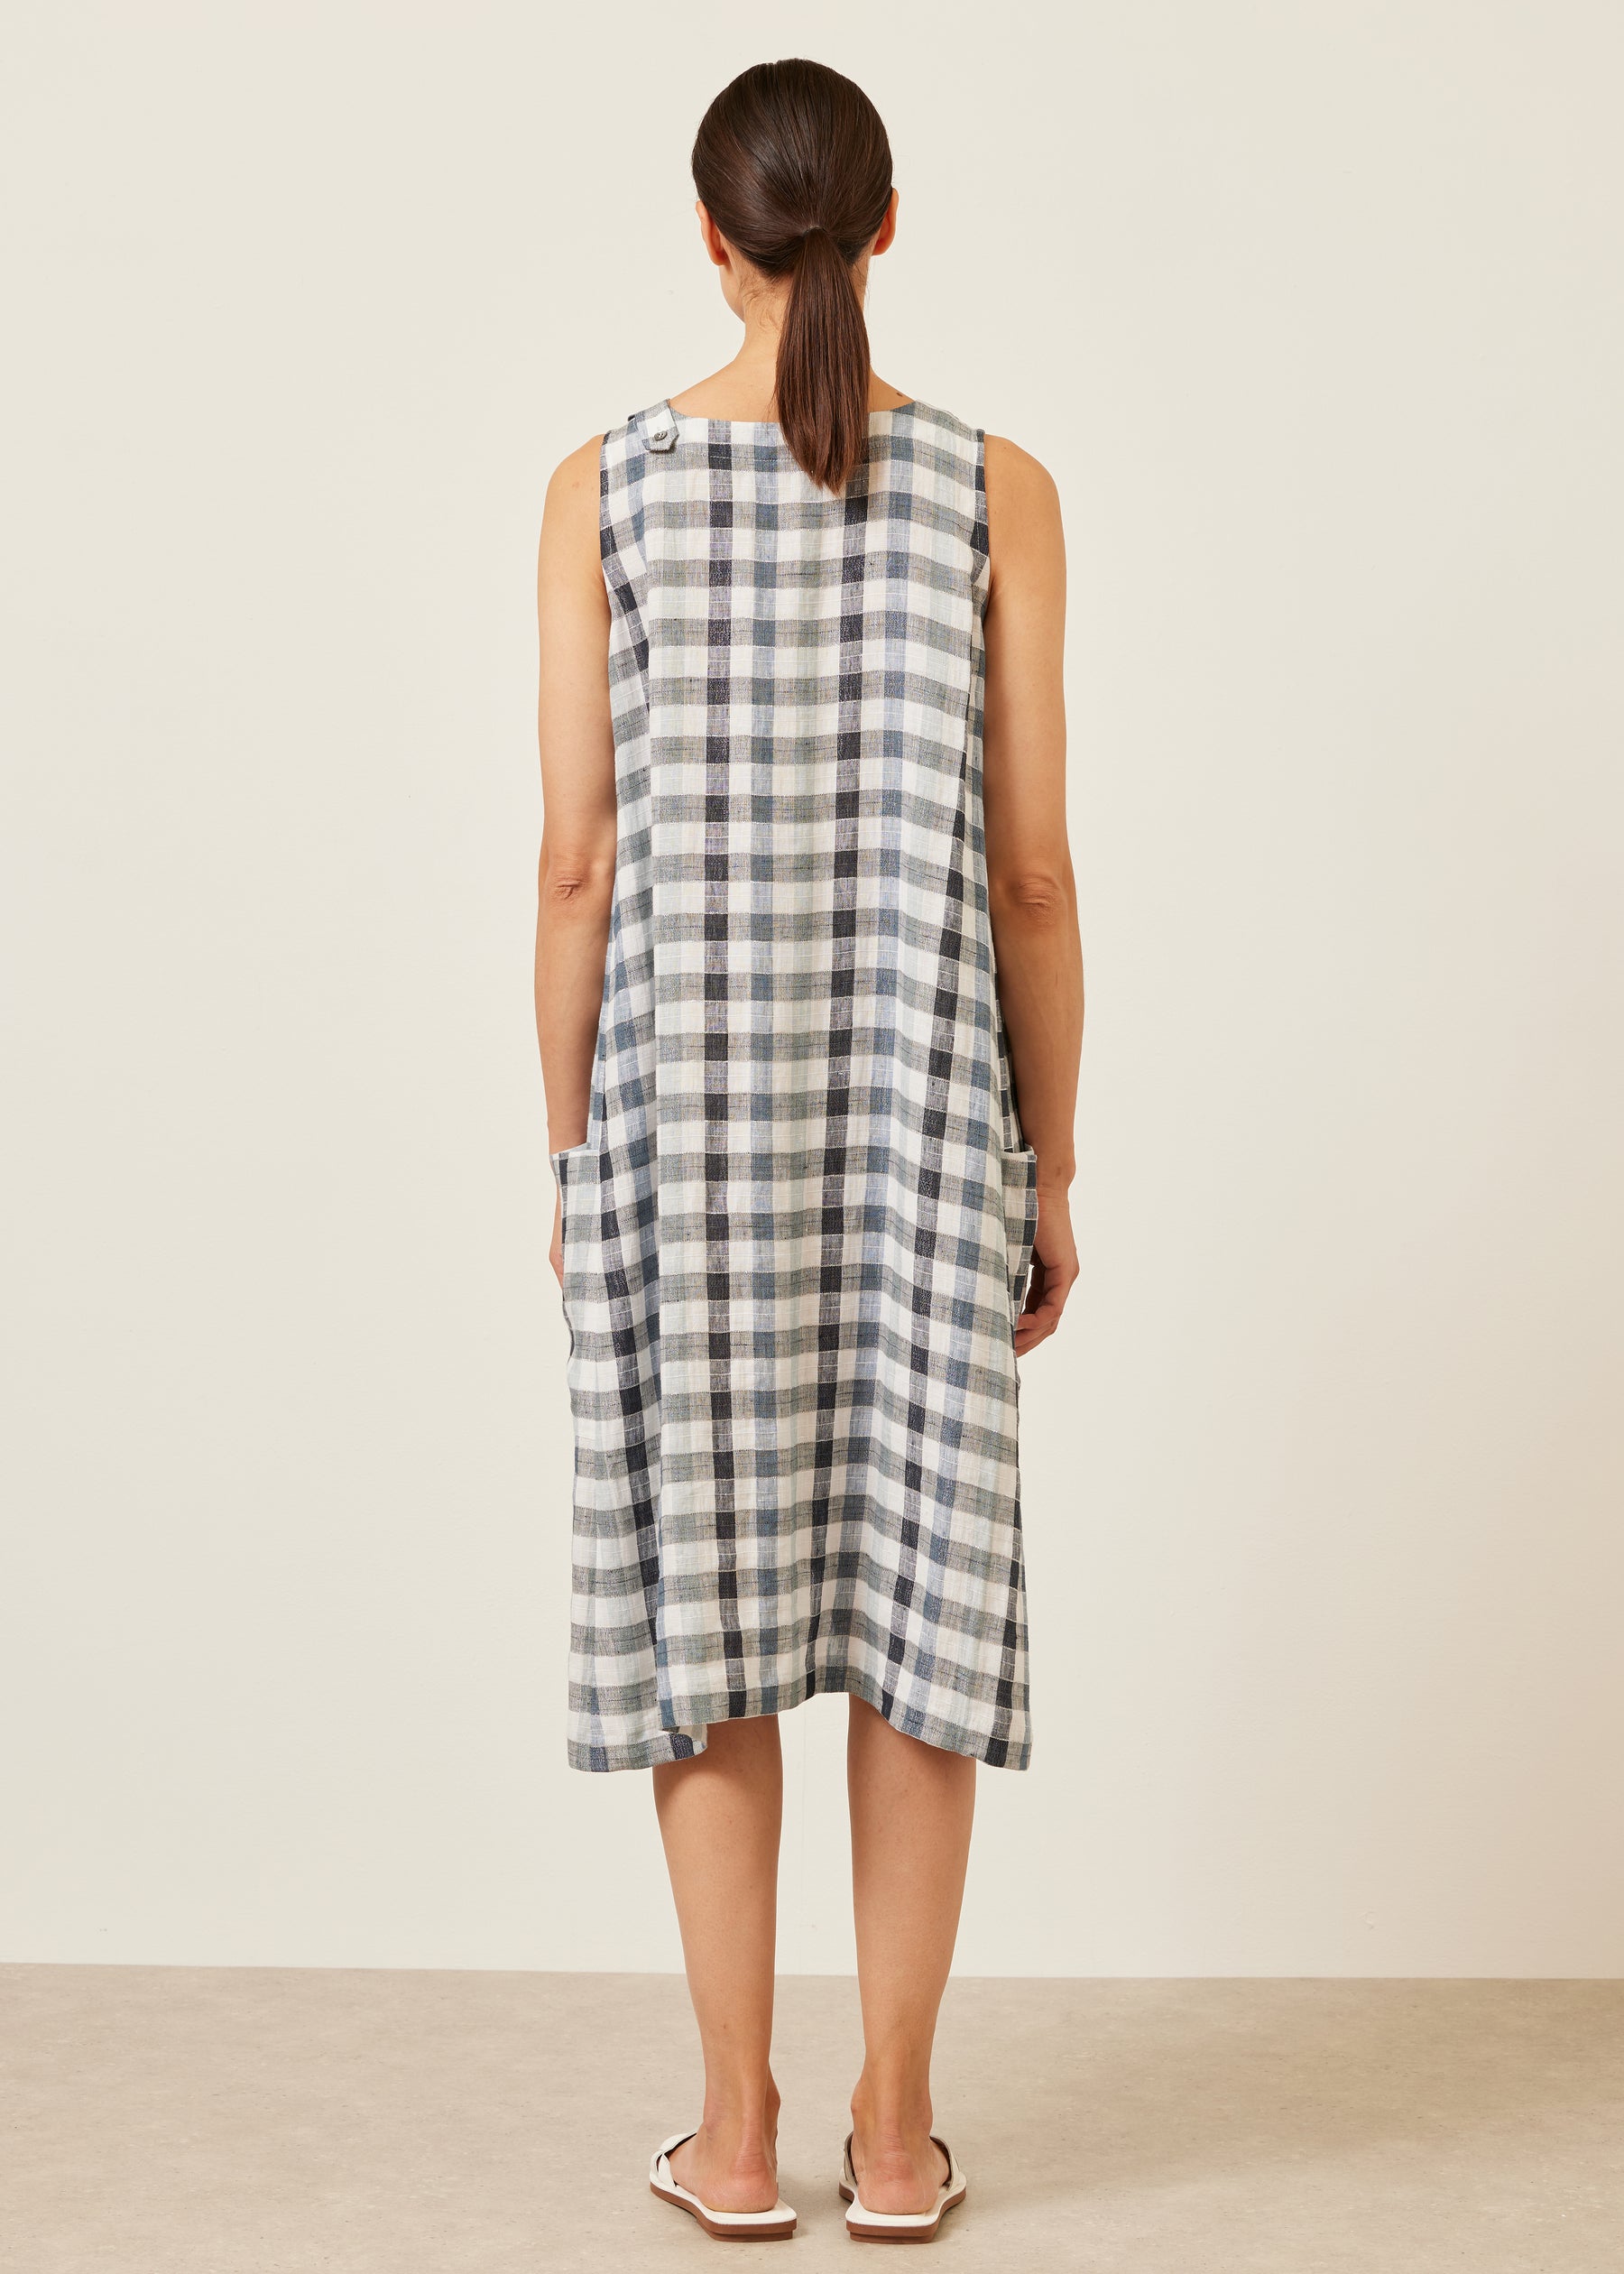 3/4 length side pleated sleeveless dress